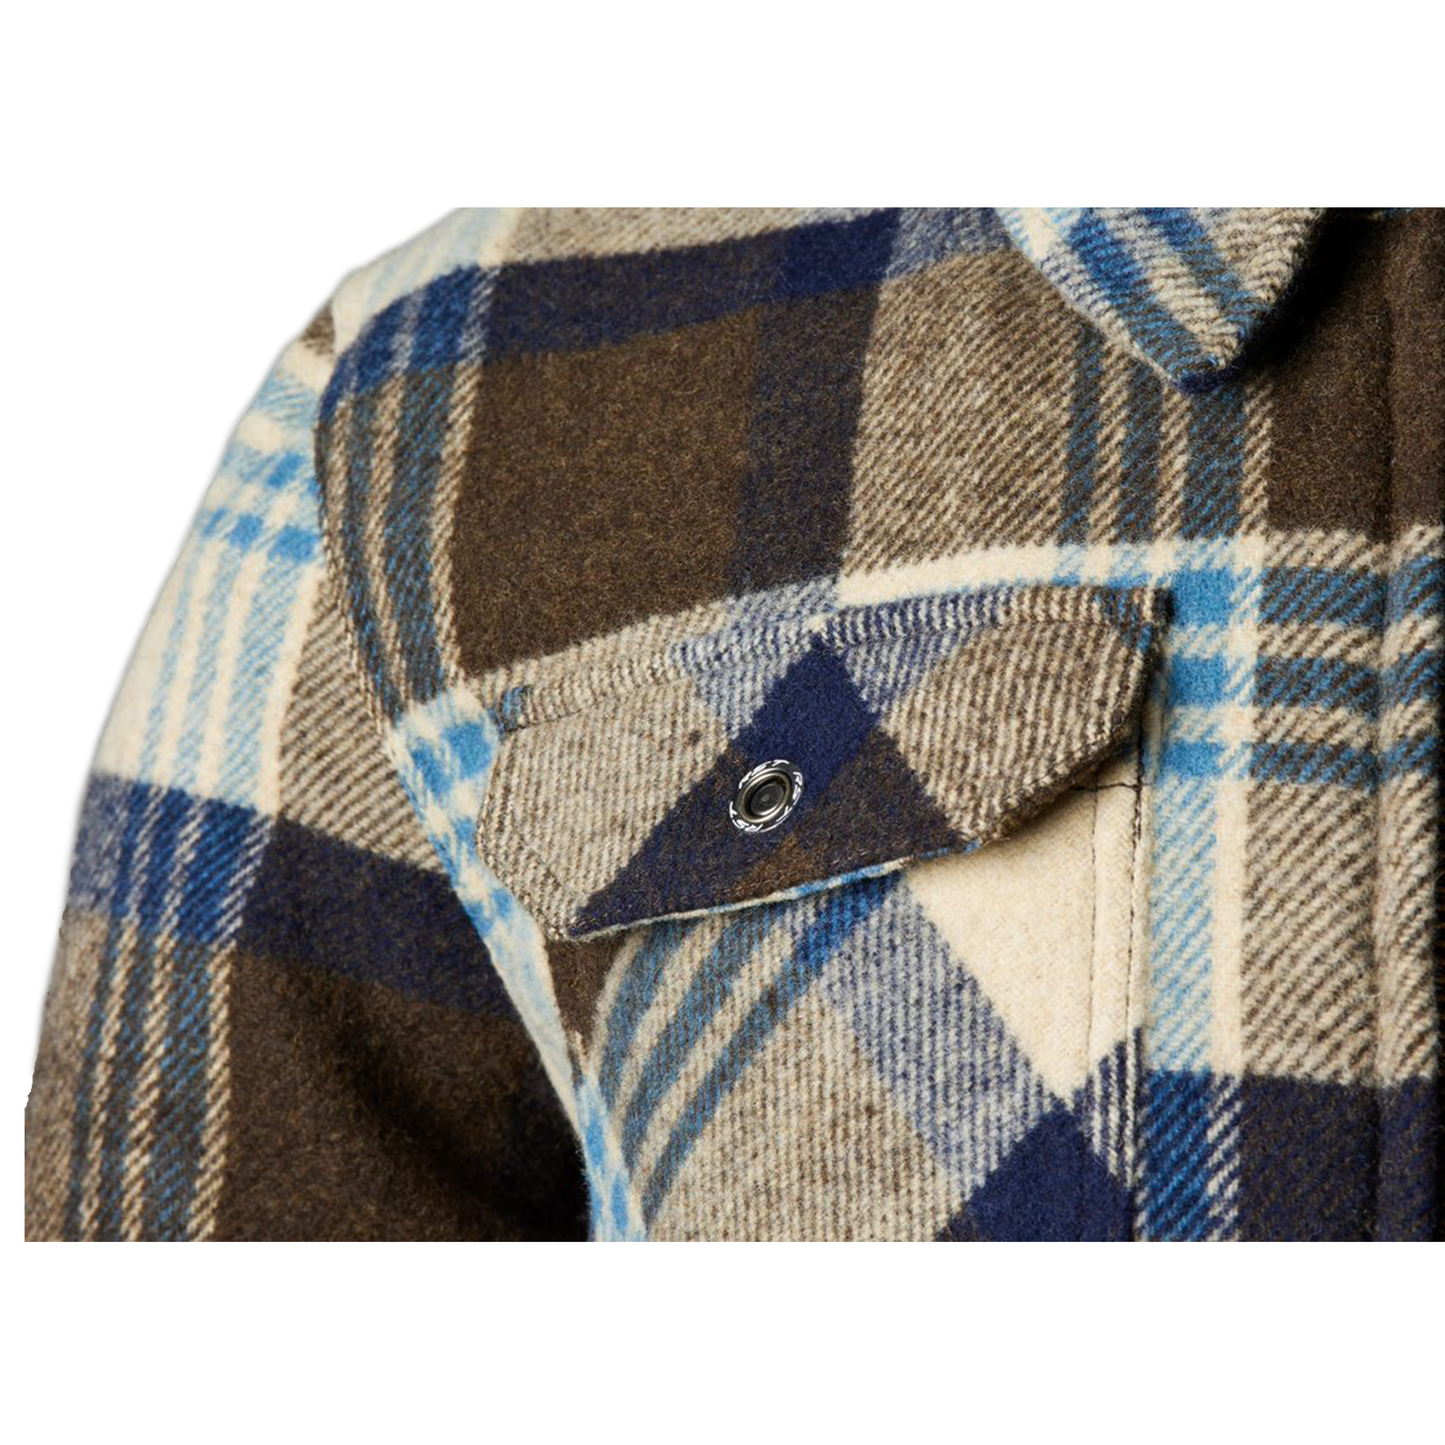 RST Brushed Men's Textile Shirt - Brown/Blue Check